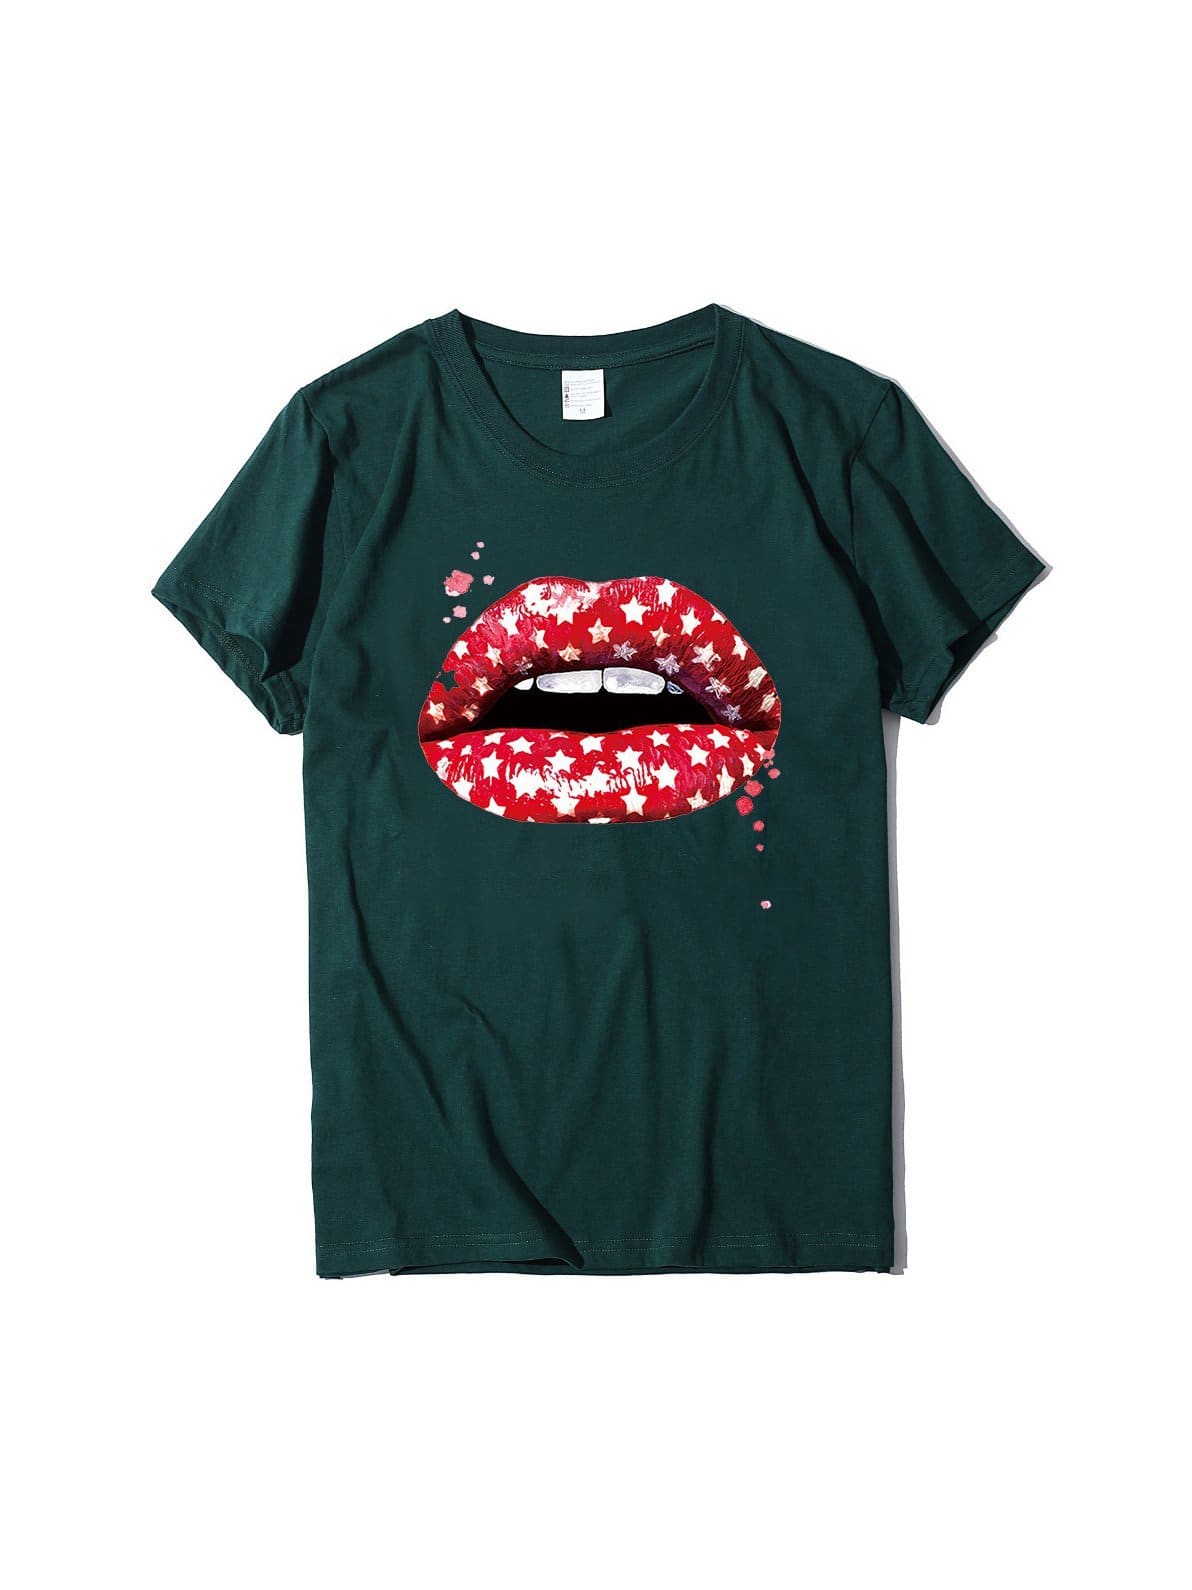 lovevop Lips Printed Casual Fashion Women T-Shirt